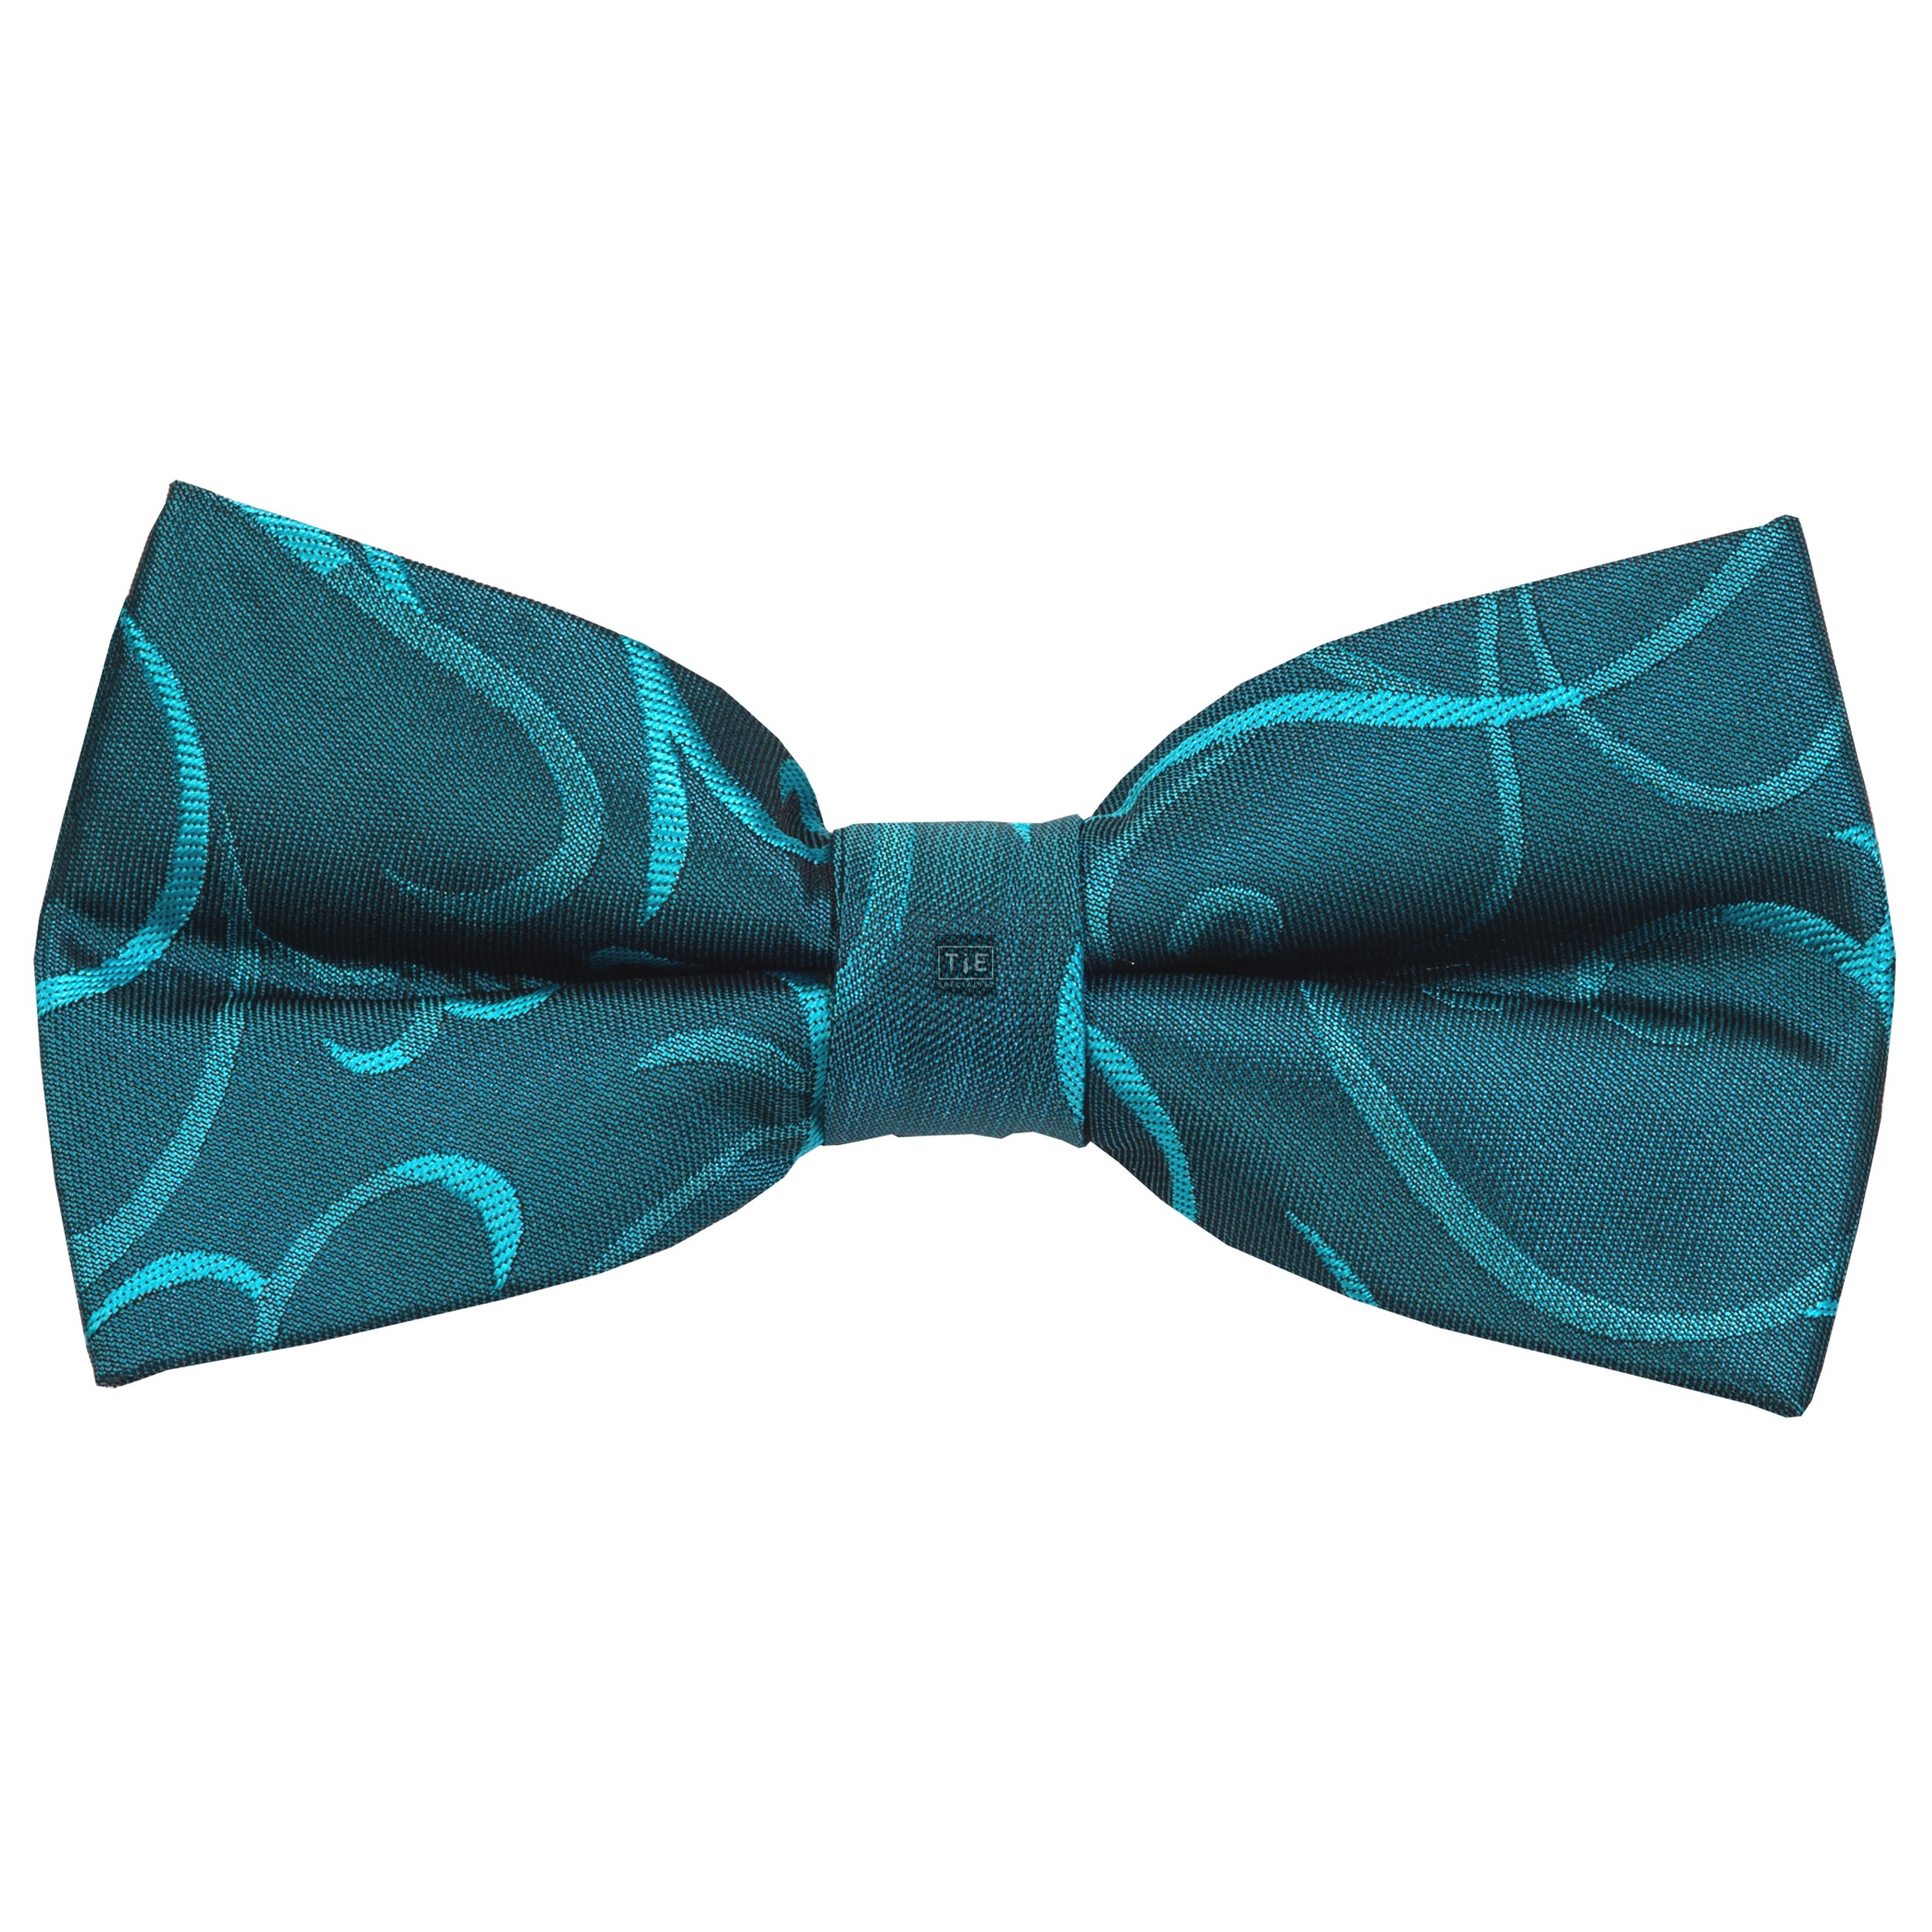 Teal Blue Modern Scroll Bow Tie - Patterned Blue Pre-Tied Wedding Bow Tie